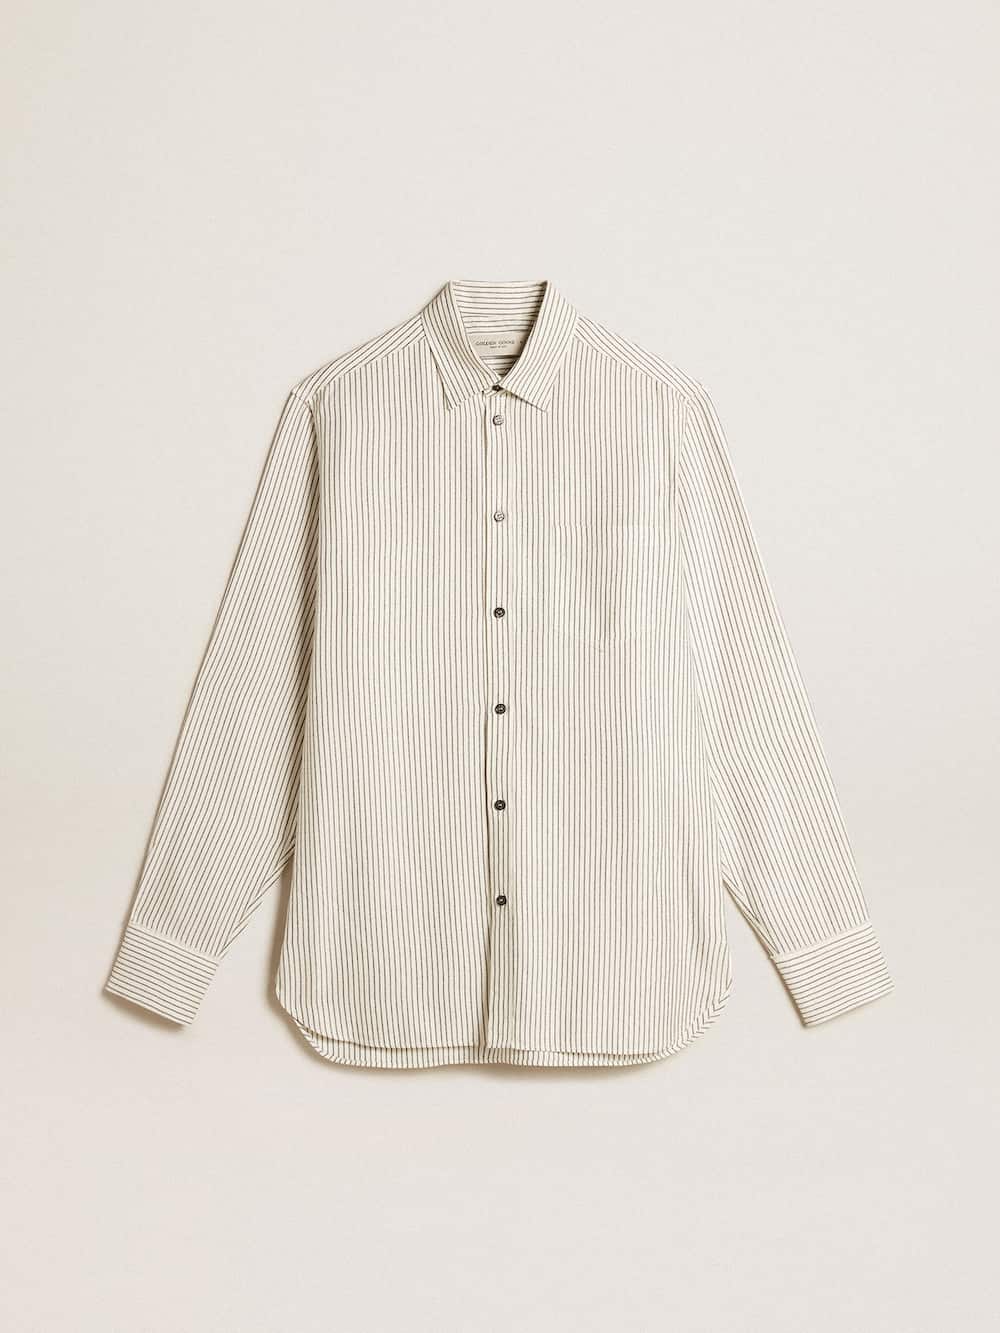 Golden Goose - Men’s white viscose shirt with narrow black stripes in 